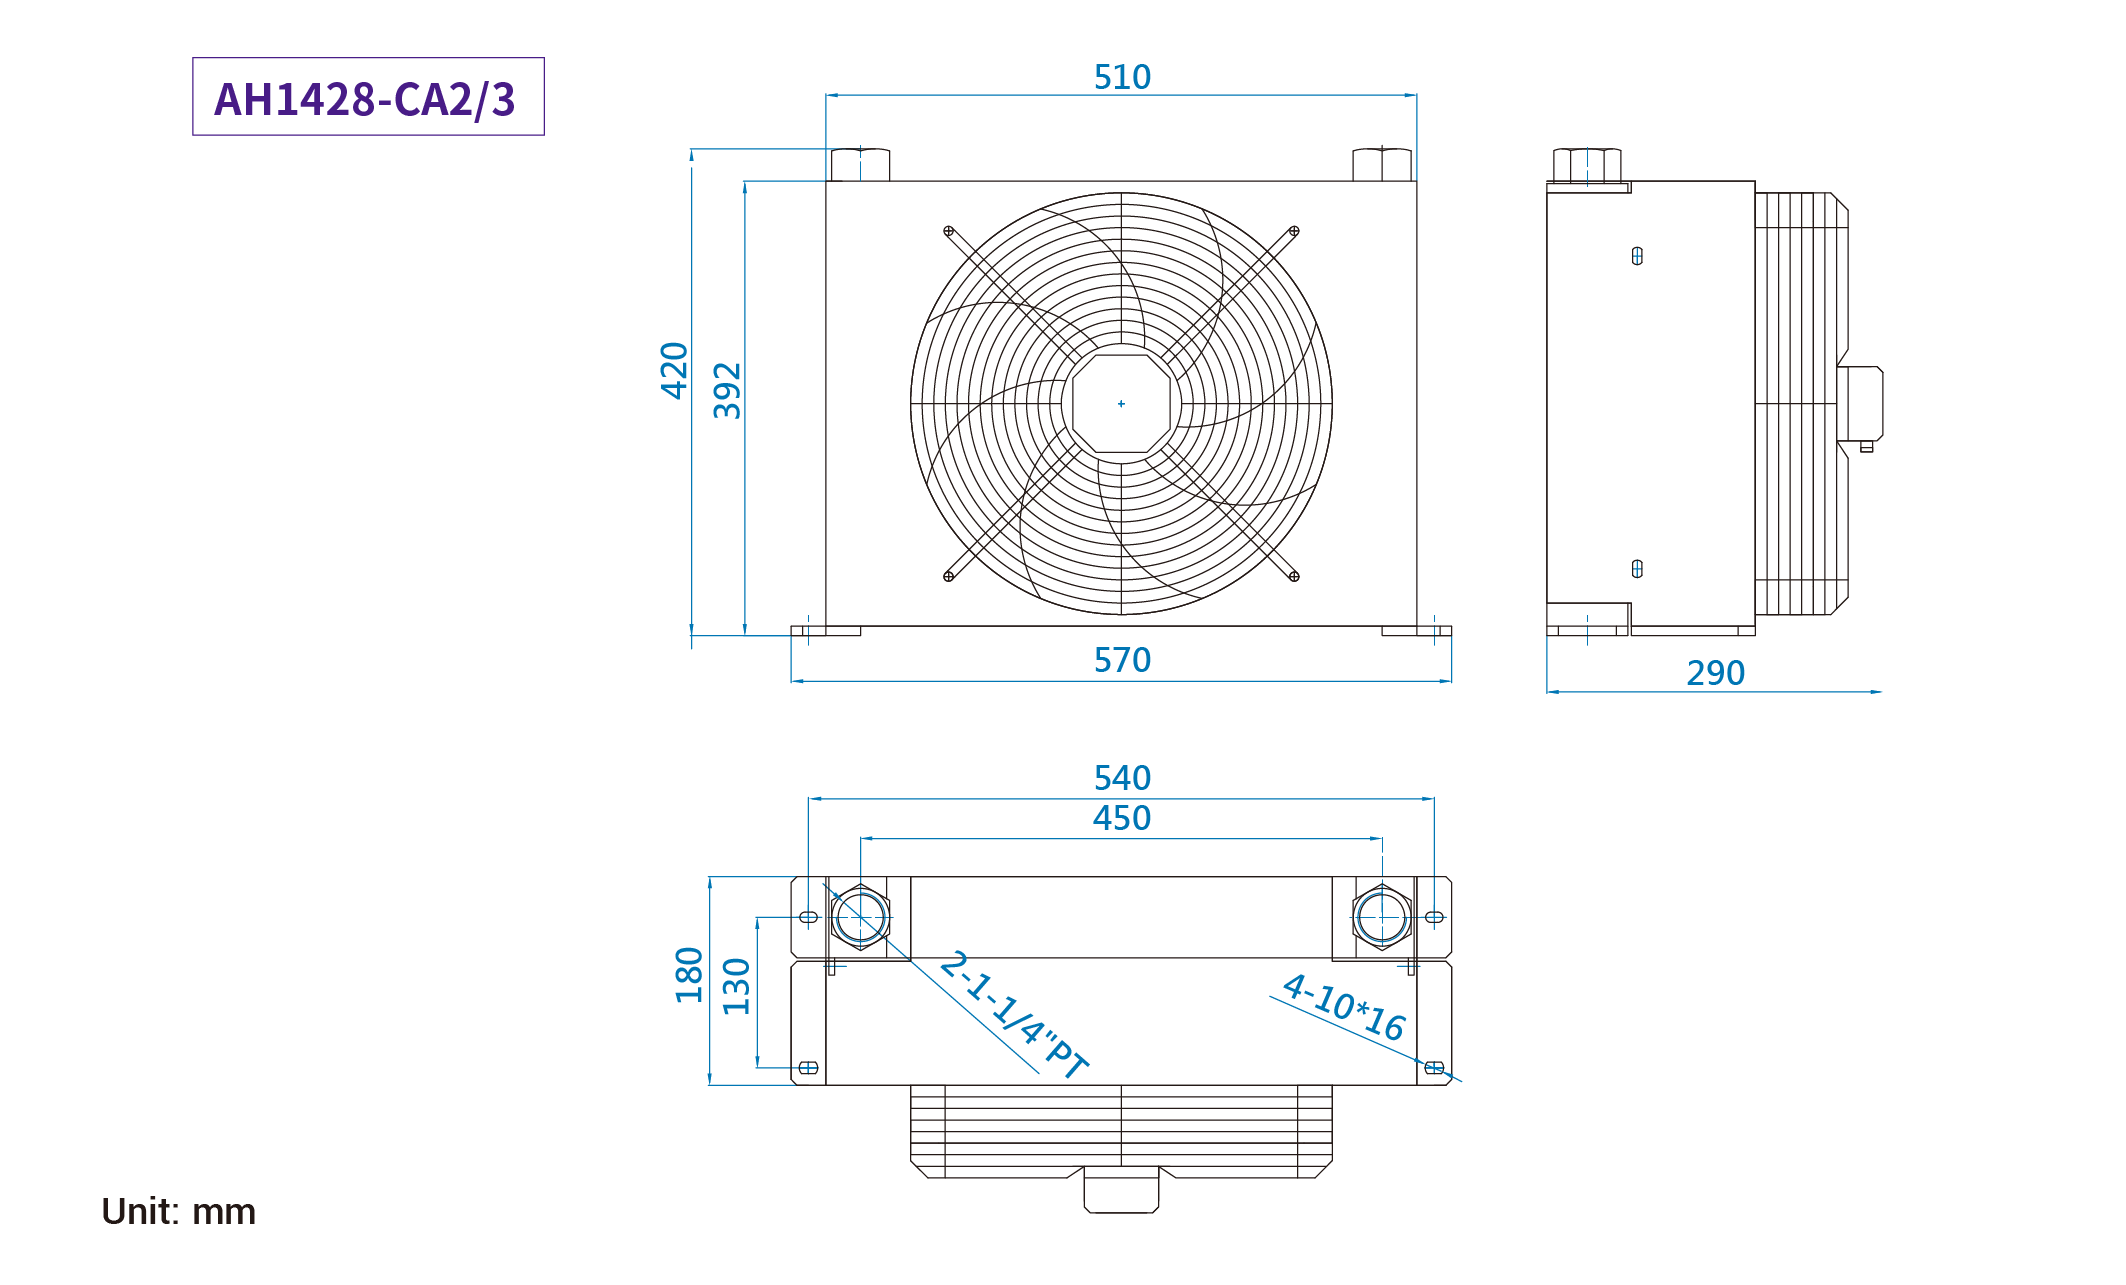  CMLMedium & high-pressure air-cooled coolers,Measurement,dimensionAH1428-CA2/3